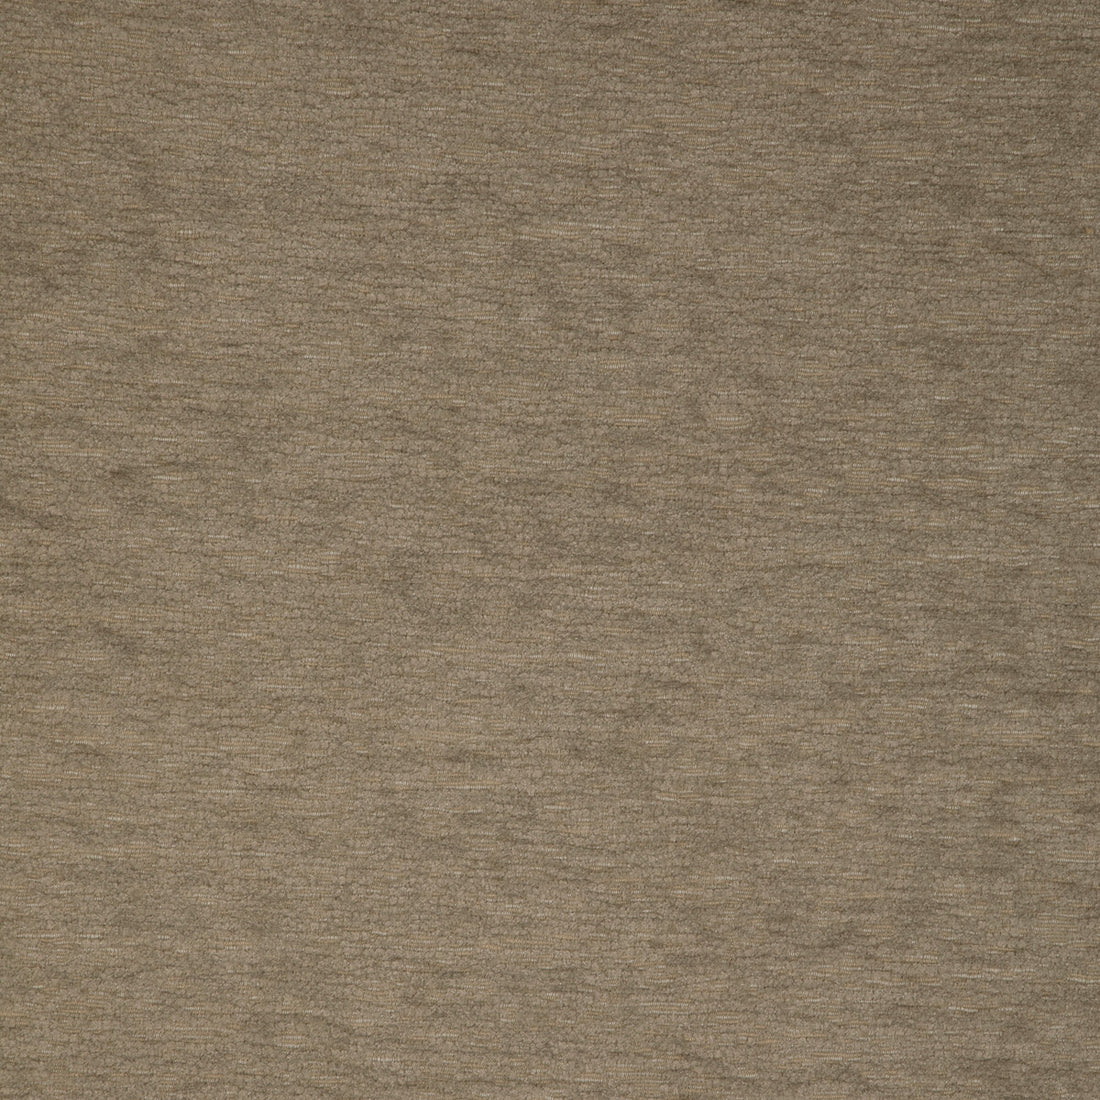 Kravet Smart fabric in 37002-106 color - pattern 37002.106.0 - by Kravet Smart in the Pavilion collection